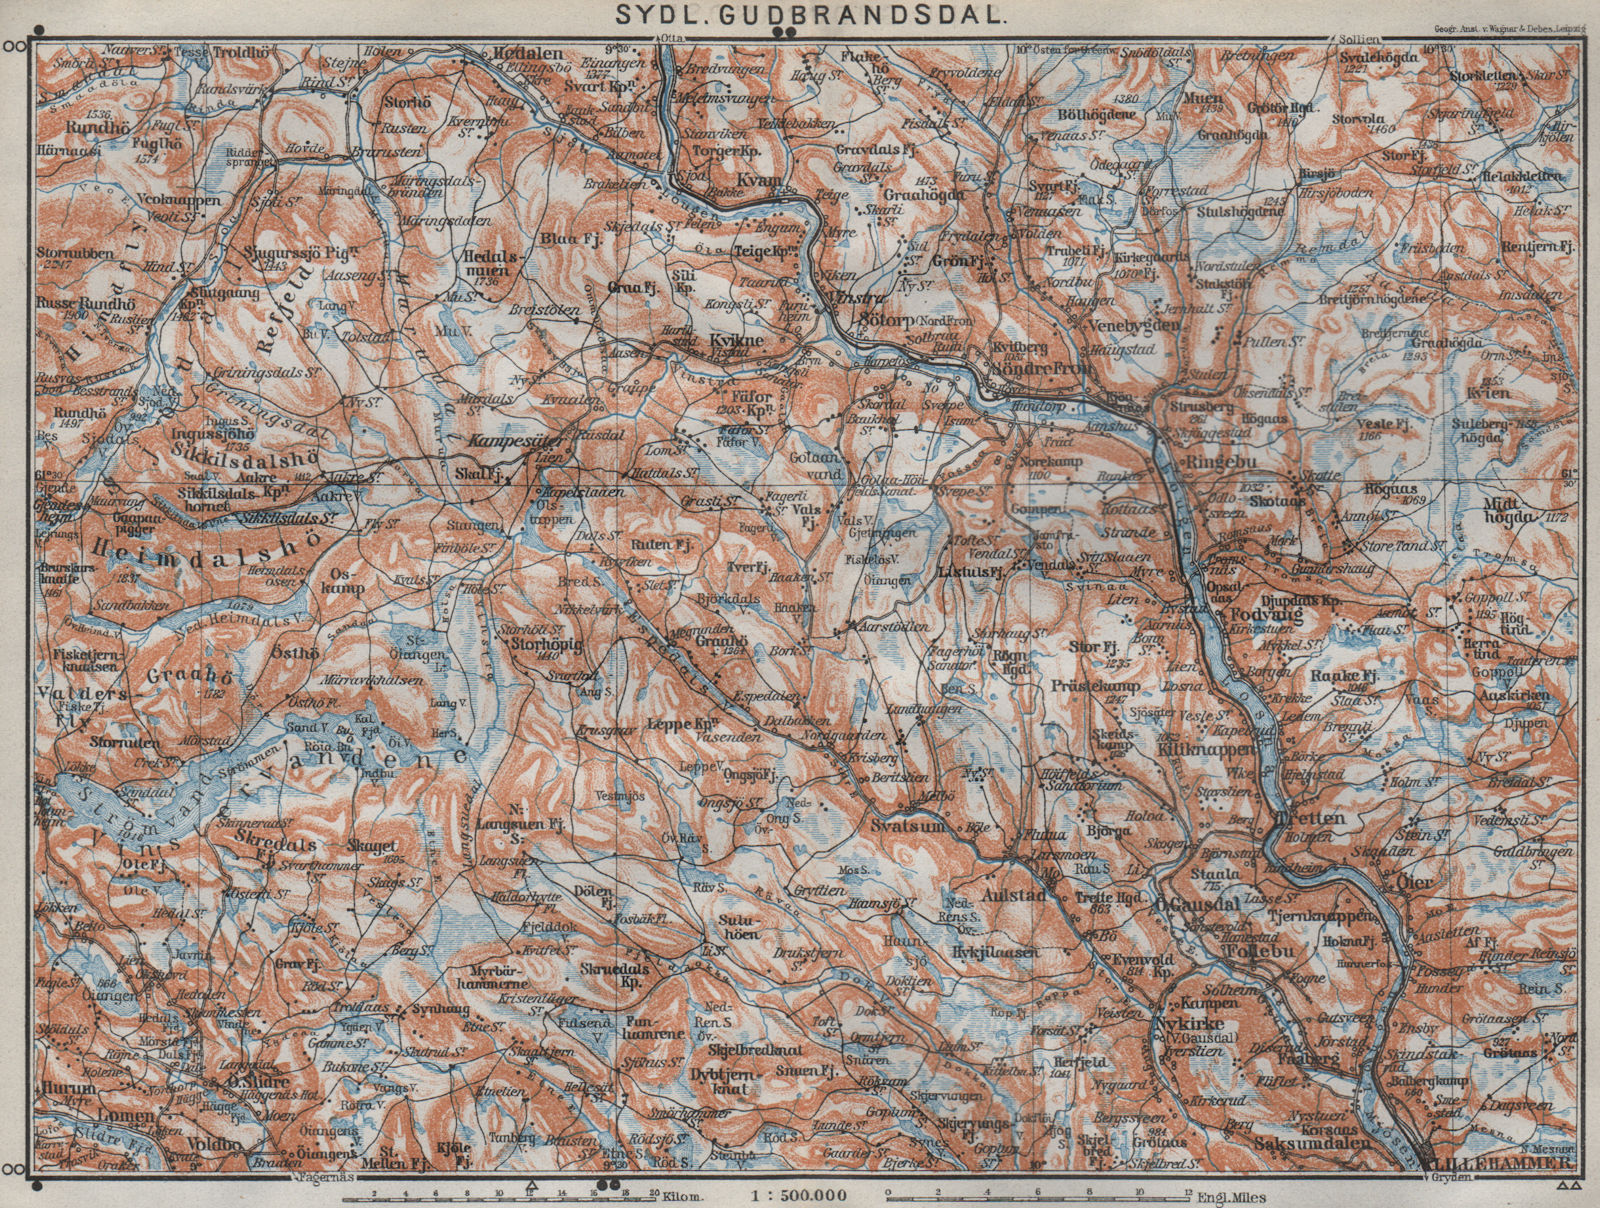 Associate Product SOUTH GUDBRANDSDAL. Sydl. Lillehammer Favang. Topo-map. Norway kart 1909